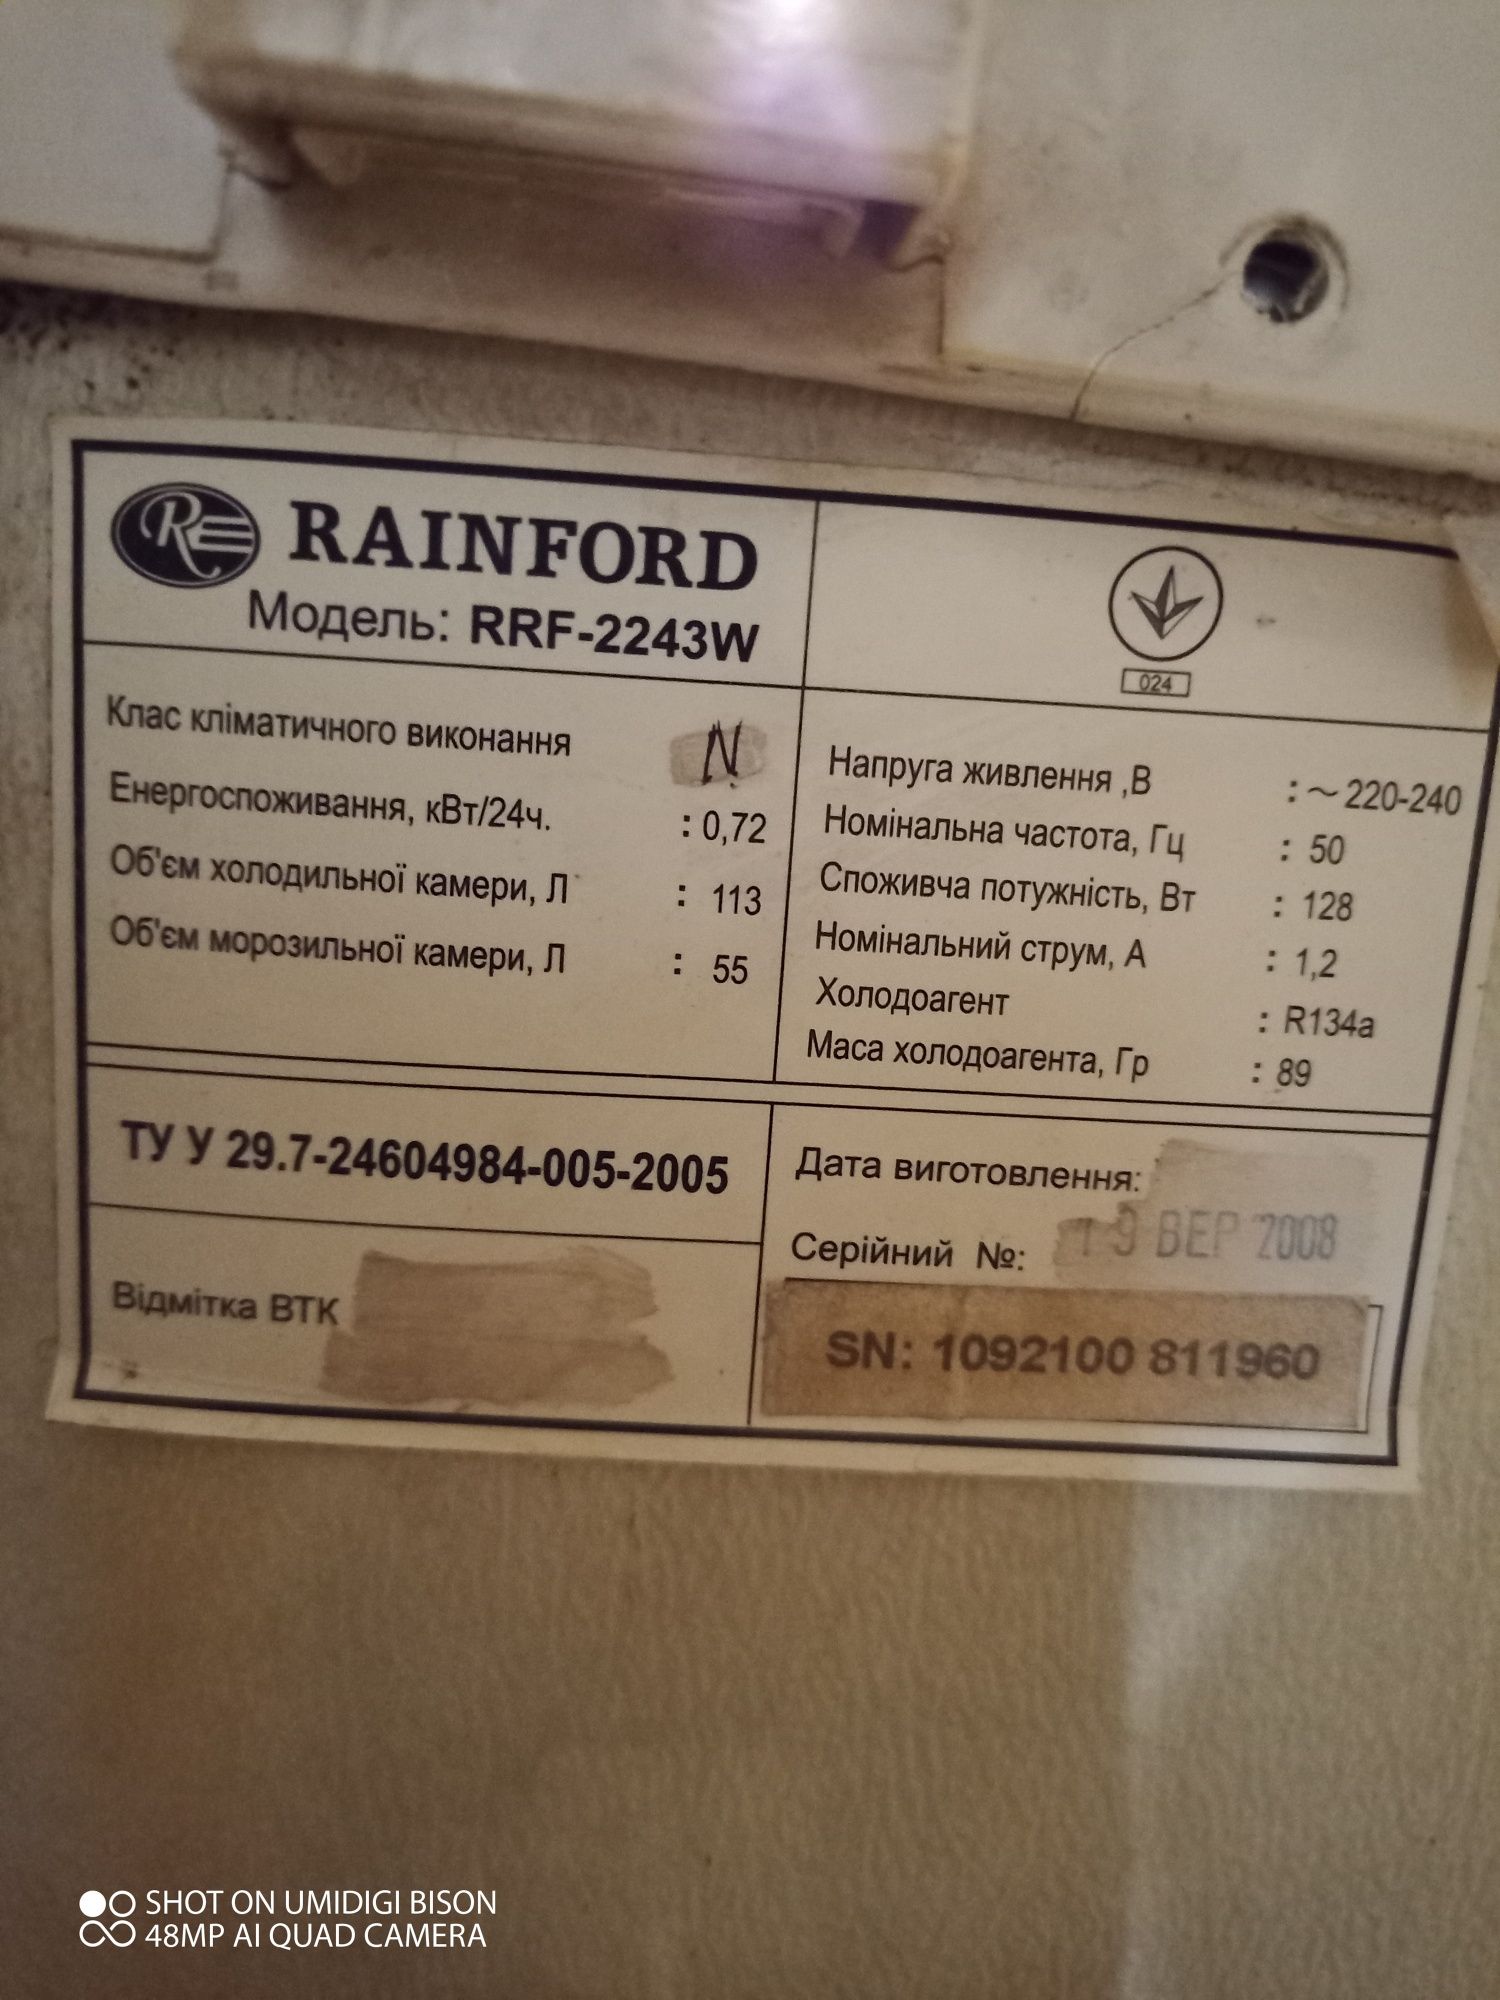 Холодильник LG Rainford